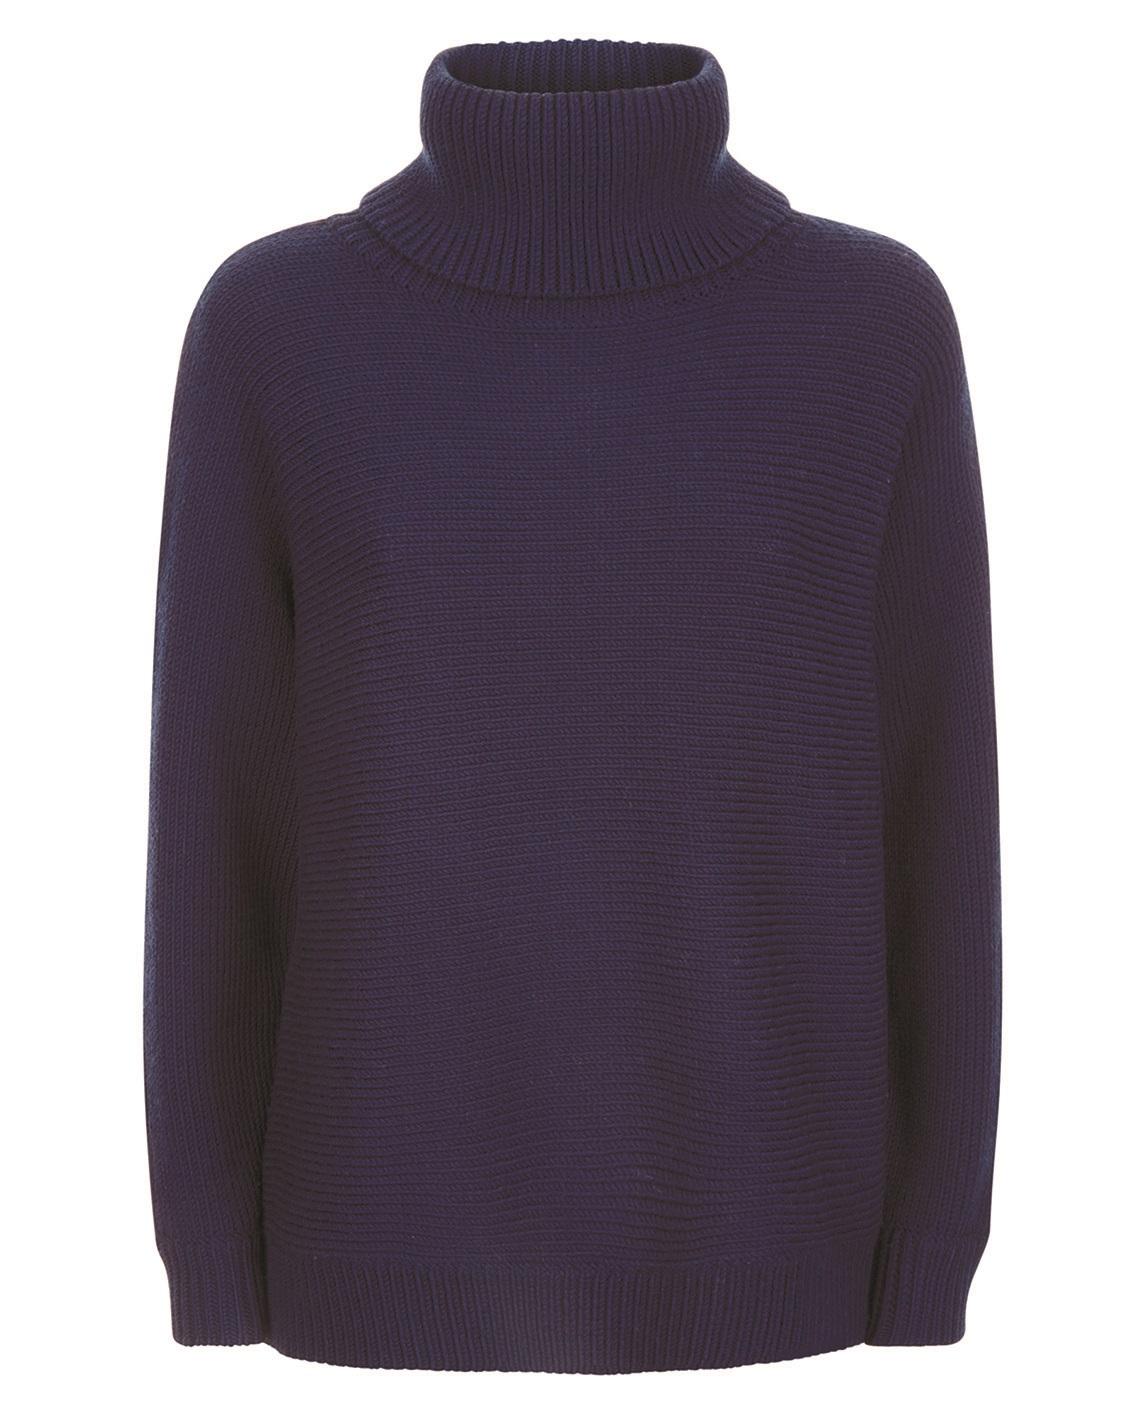 Jaeger, Chunky Gostwyck Sweater, £199